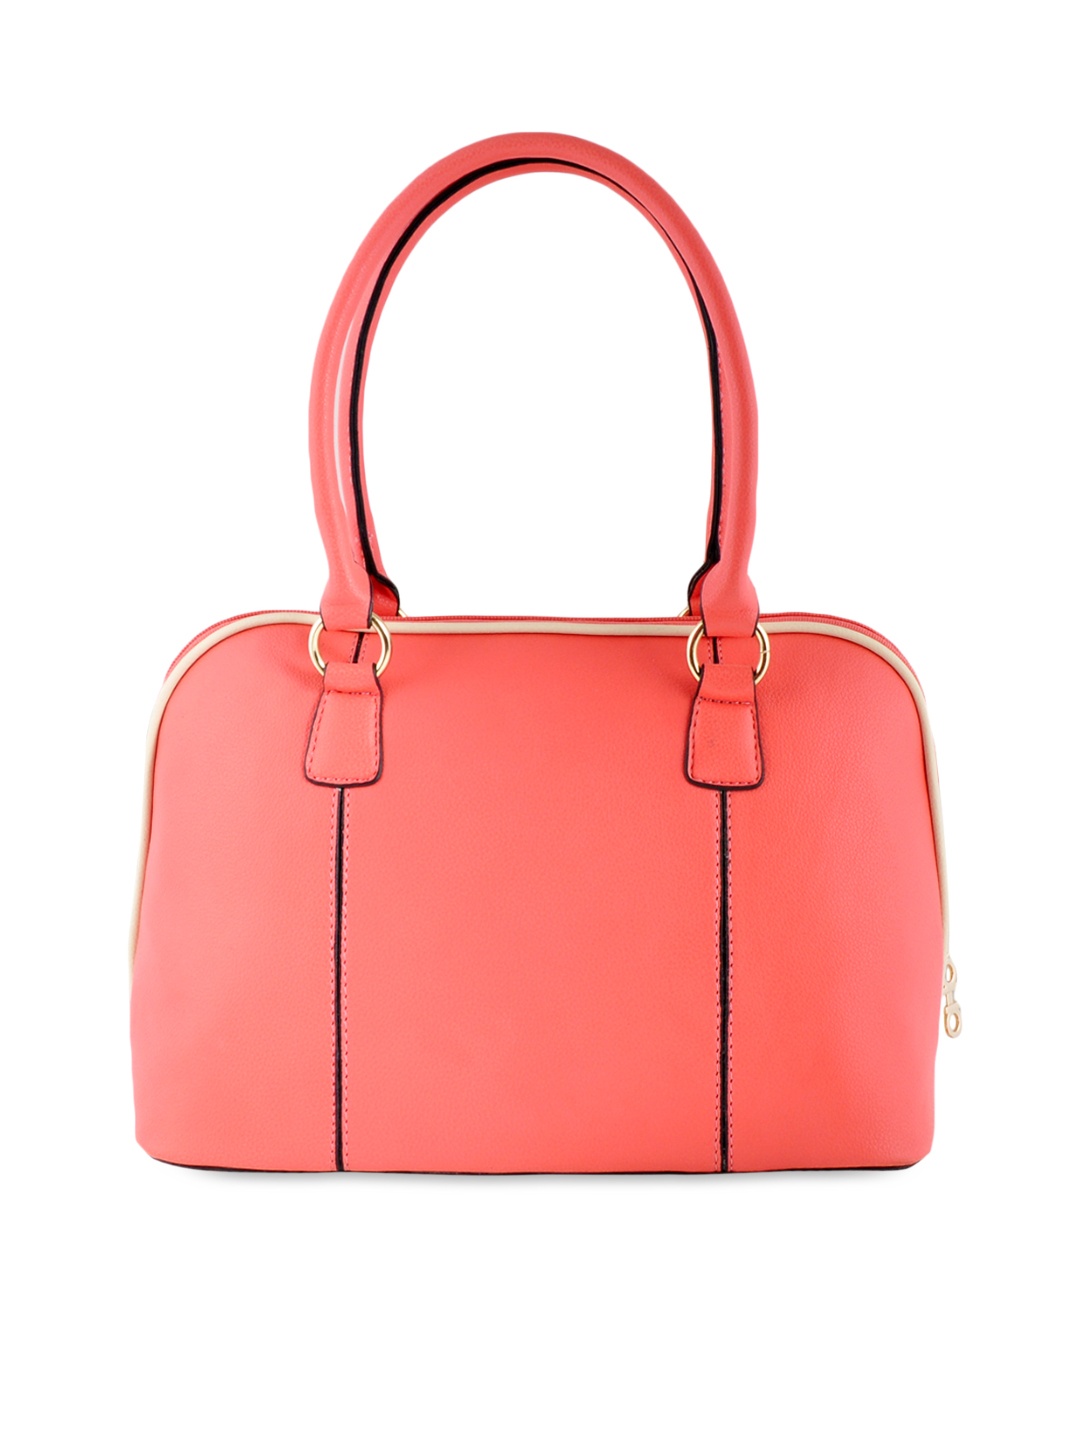 Myntra Daphne Peach-Coloured Shoulder Bag 914423 | Buy Myntra Daphne ...